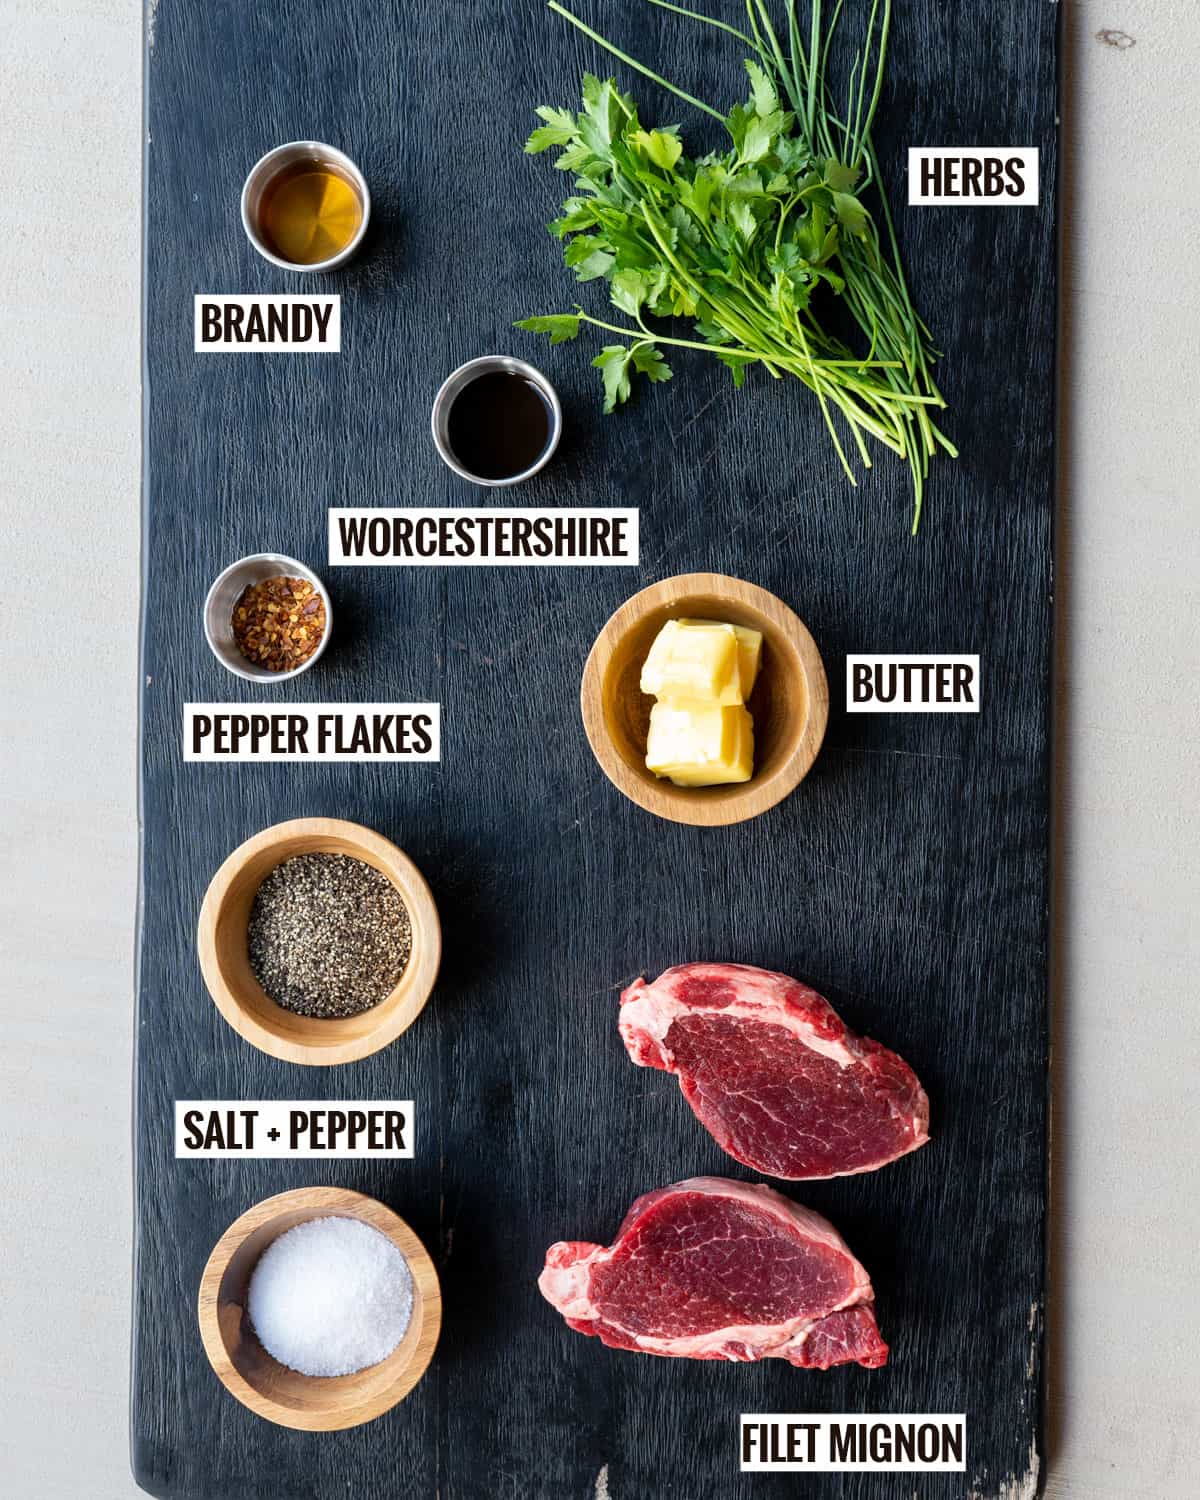 Steak Diane ingredients: herbs, brandy, worcestershire sauce, butter, pepper flakes, salt, pepper, filet mignon.